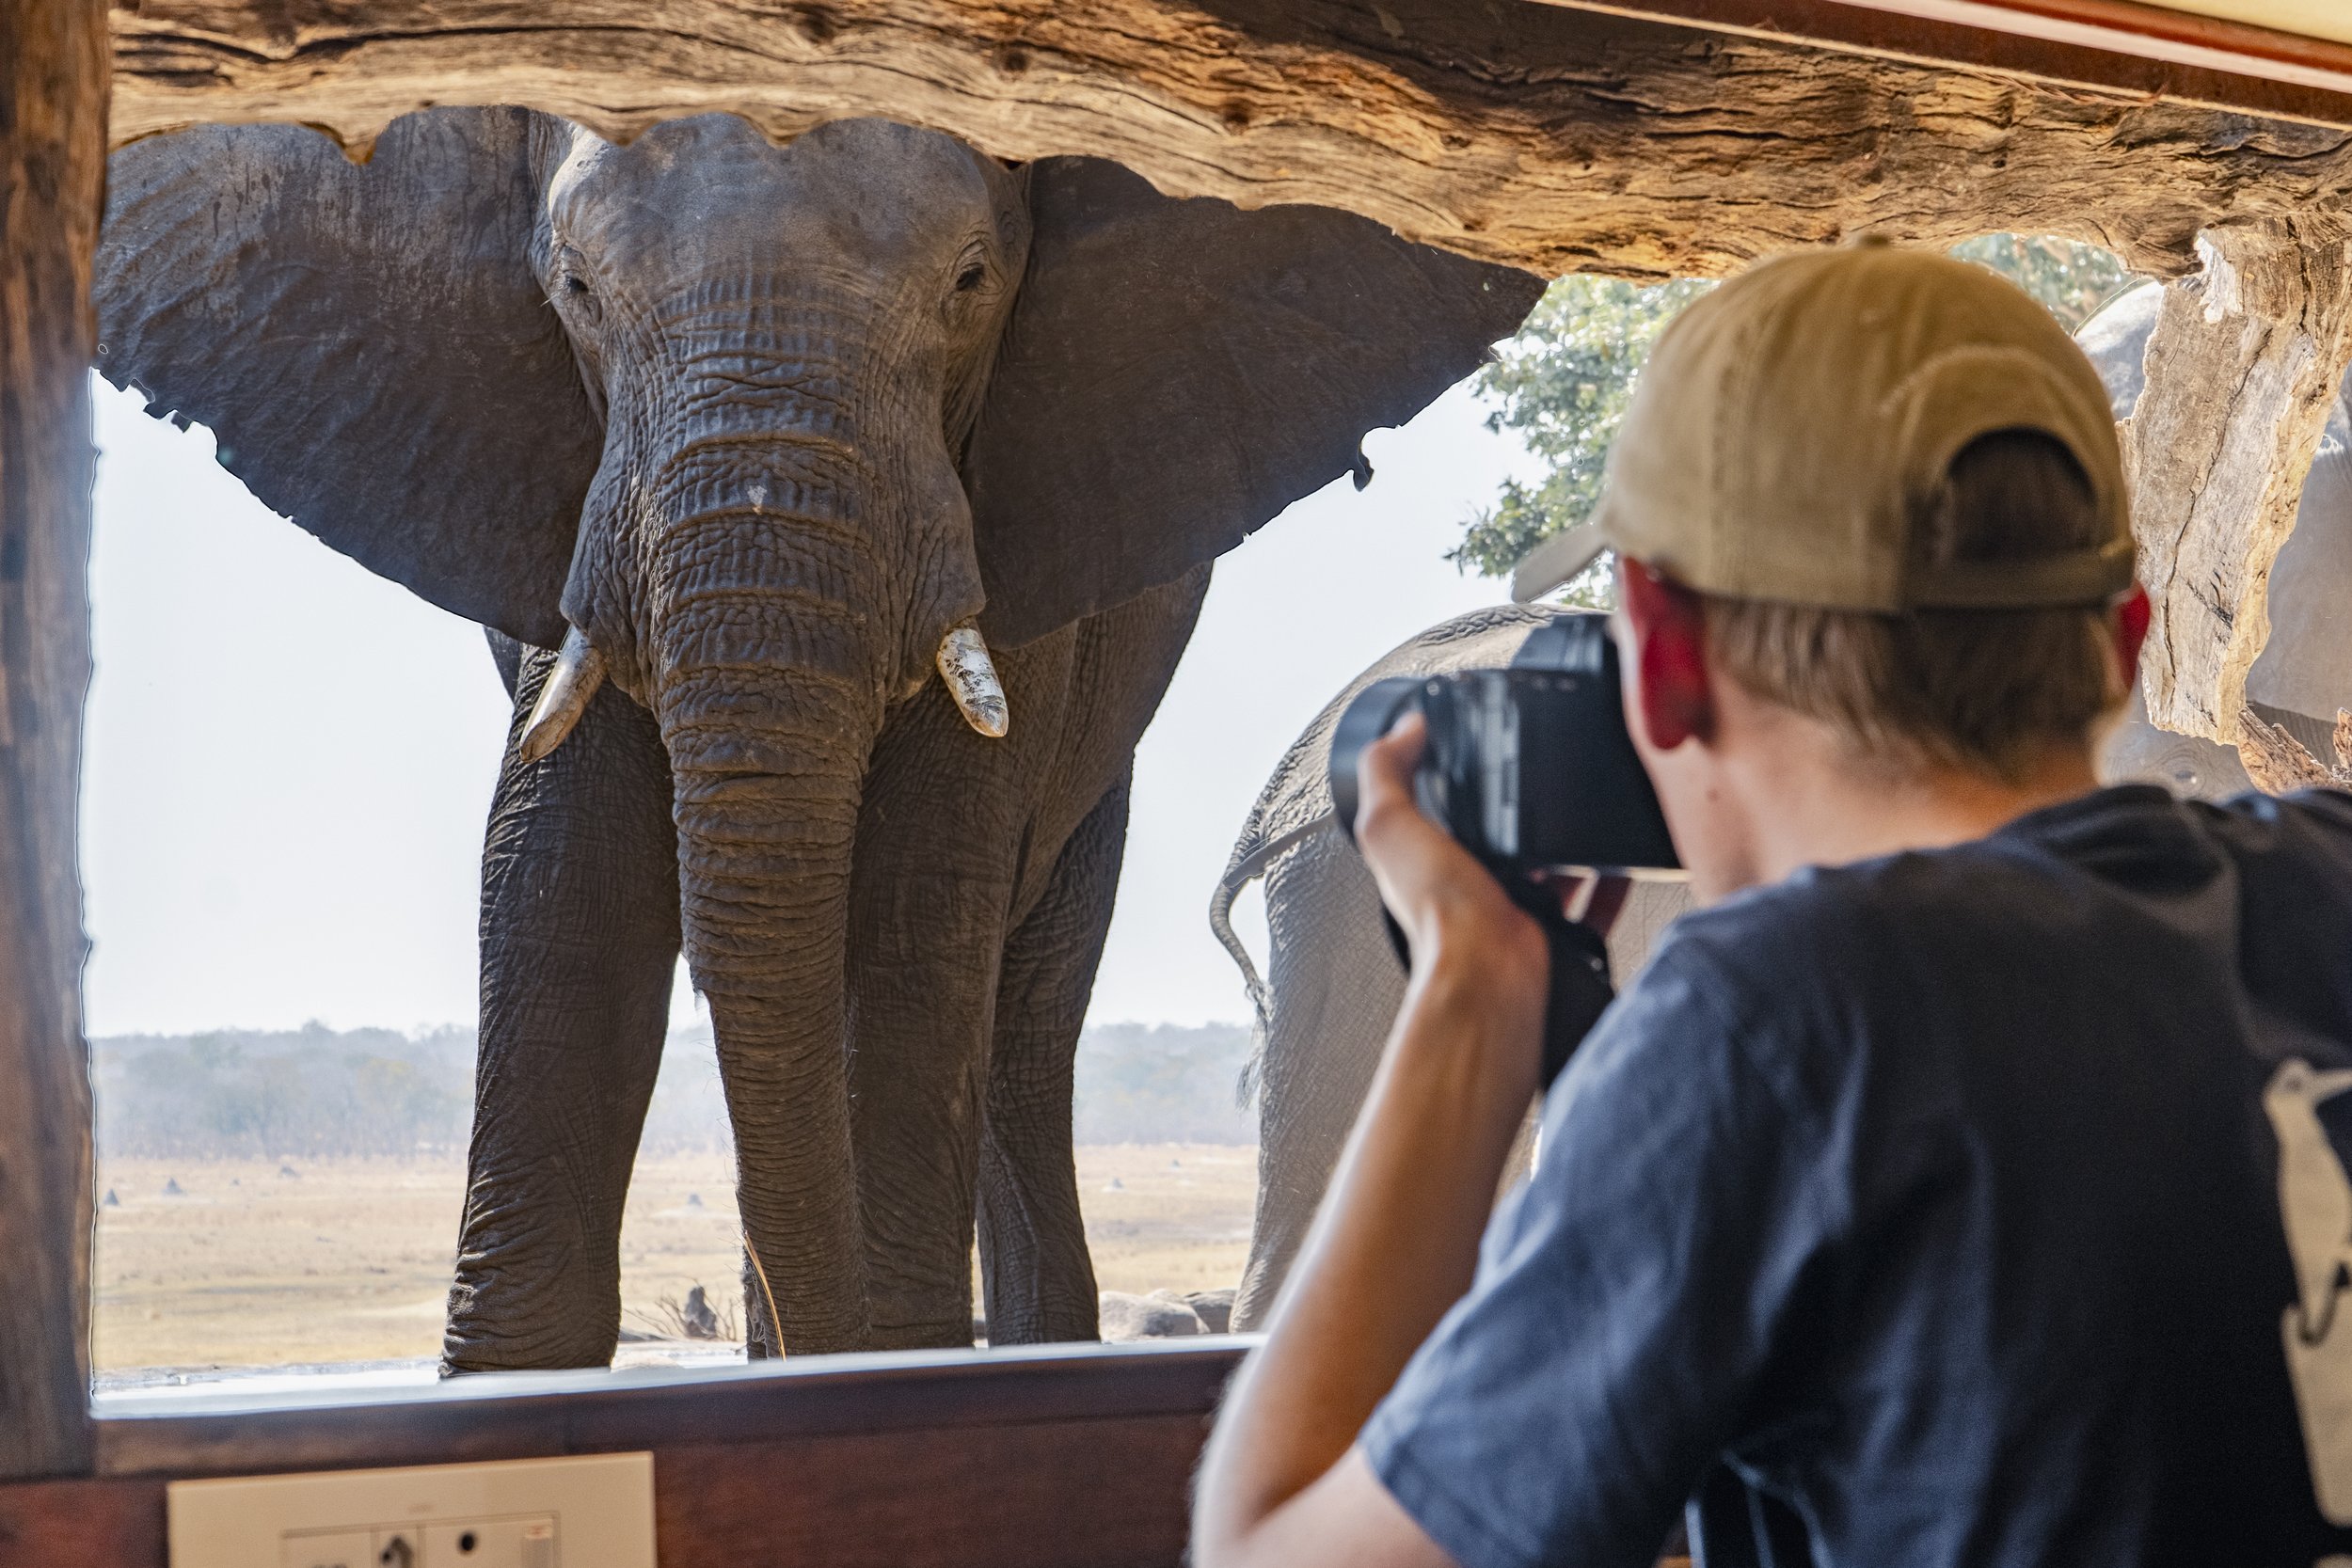 A man taking photos of an elephant.